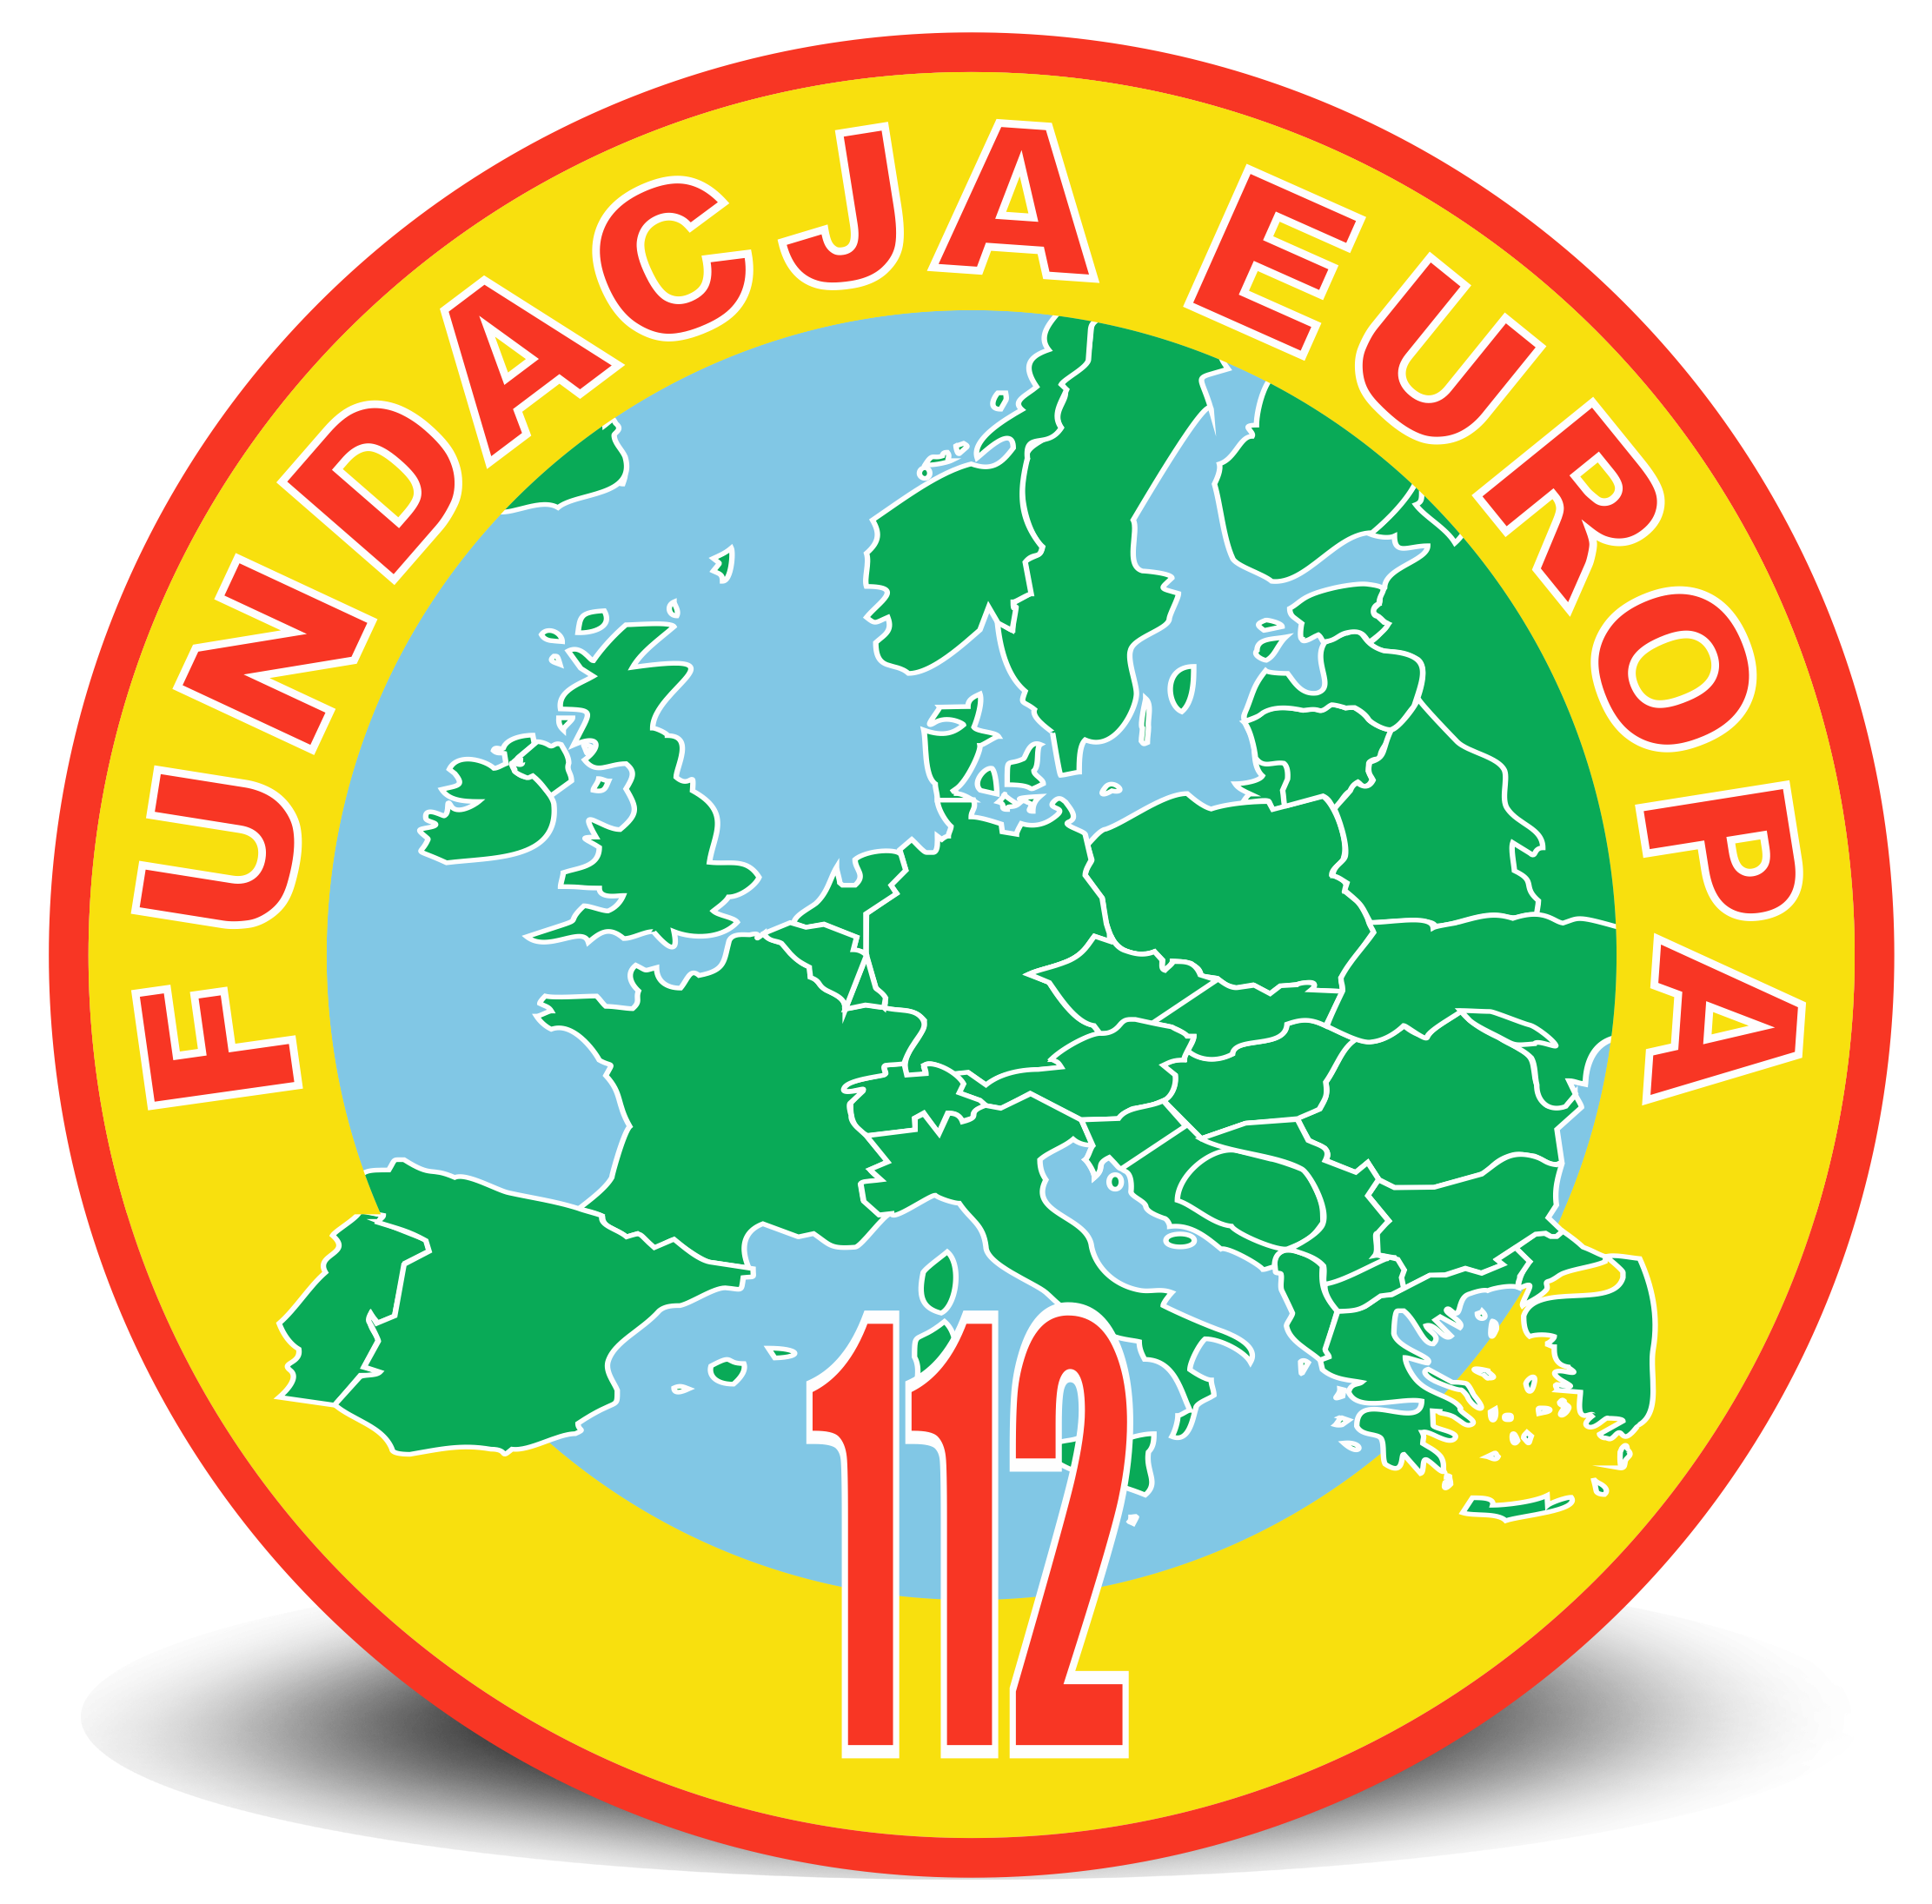 Europa 112